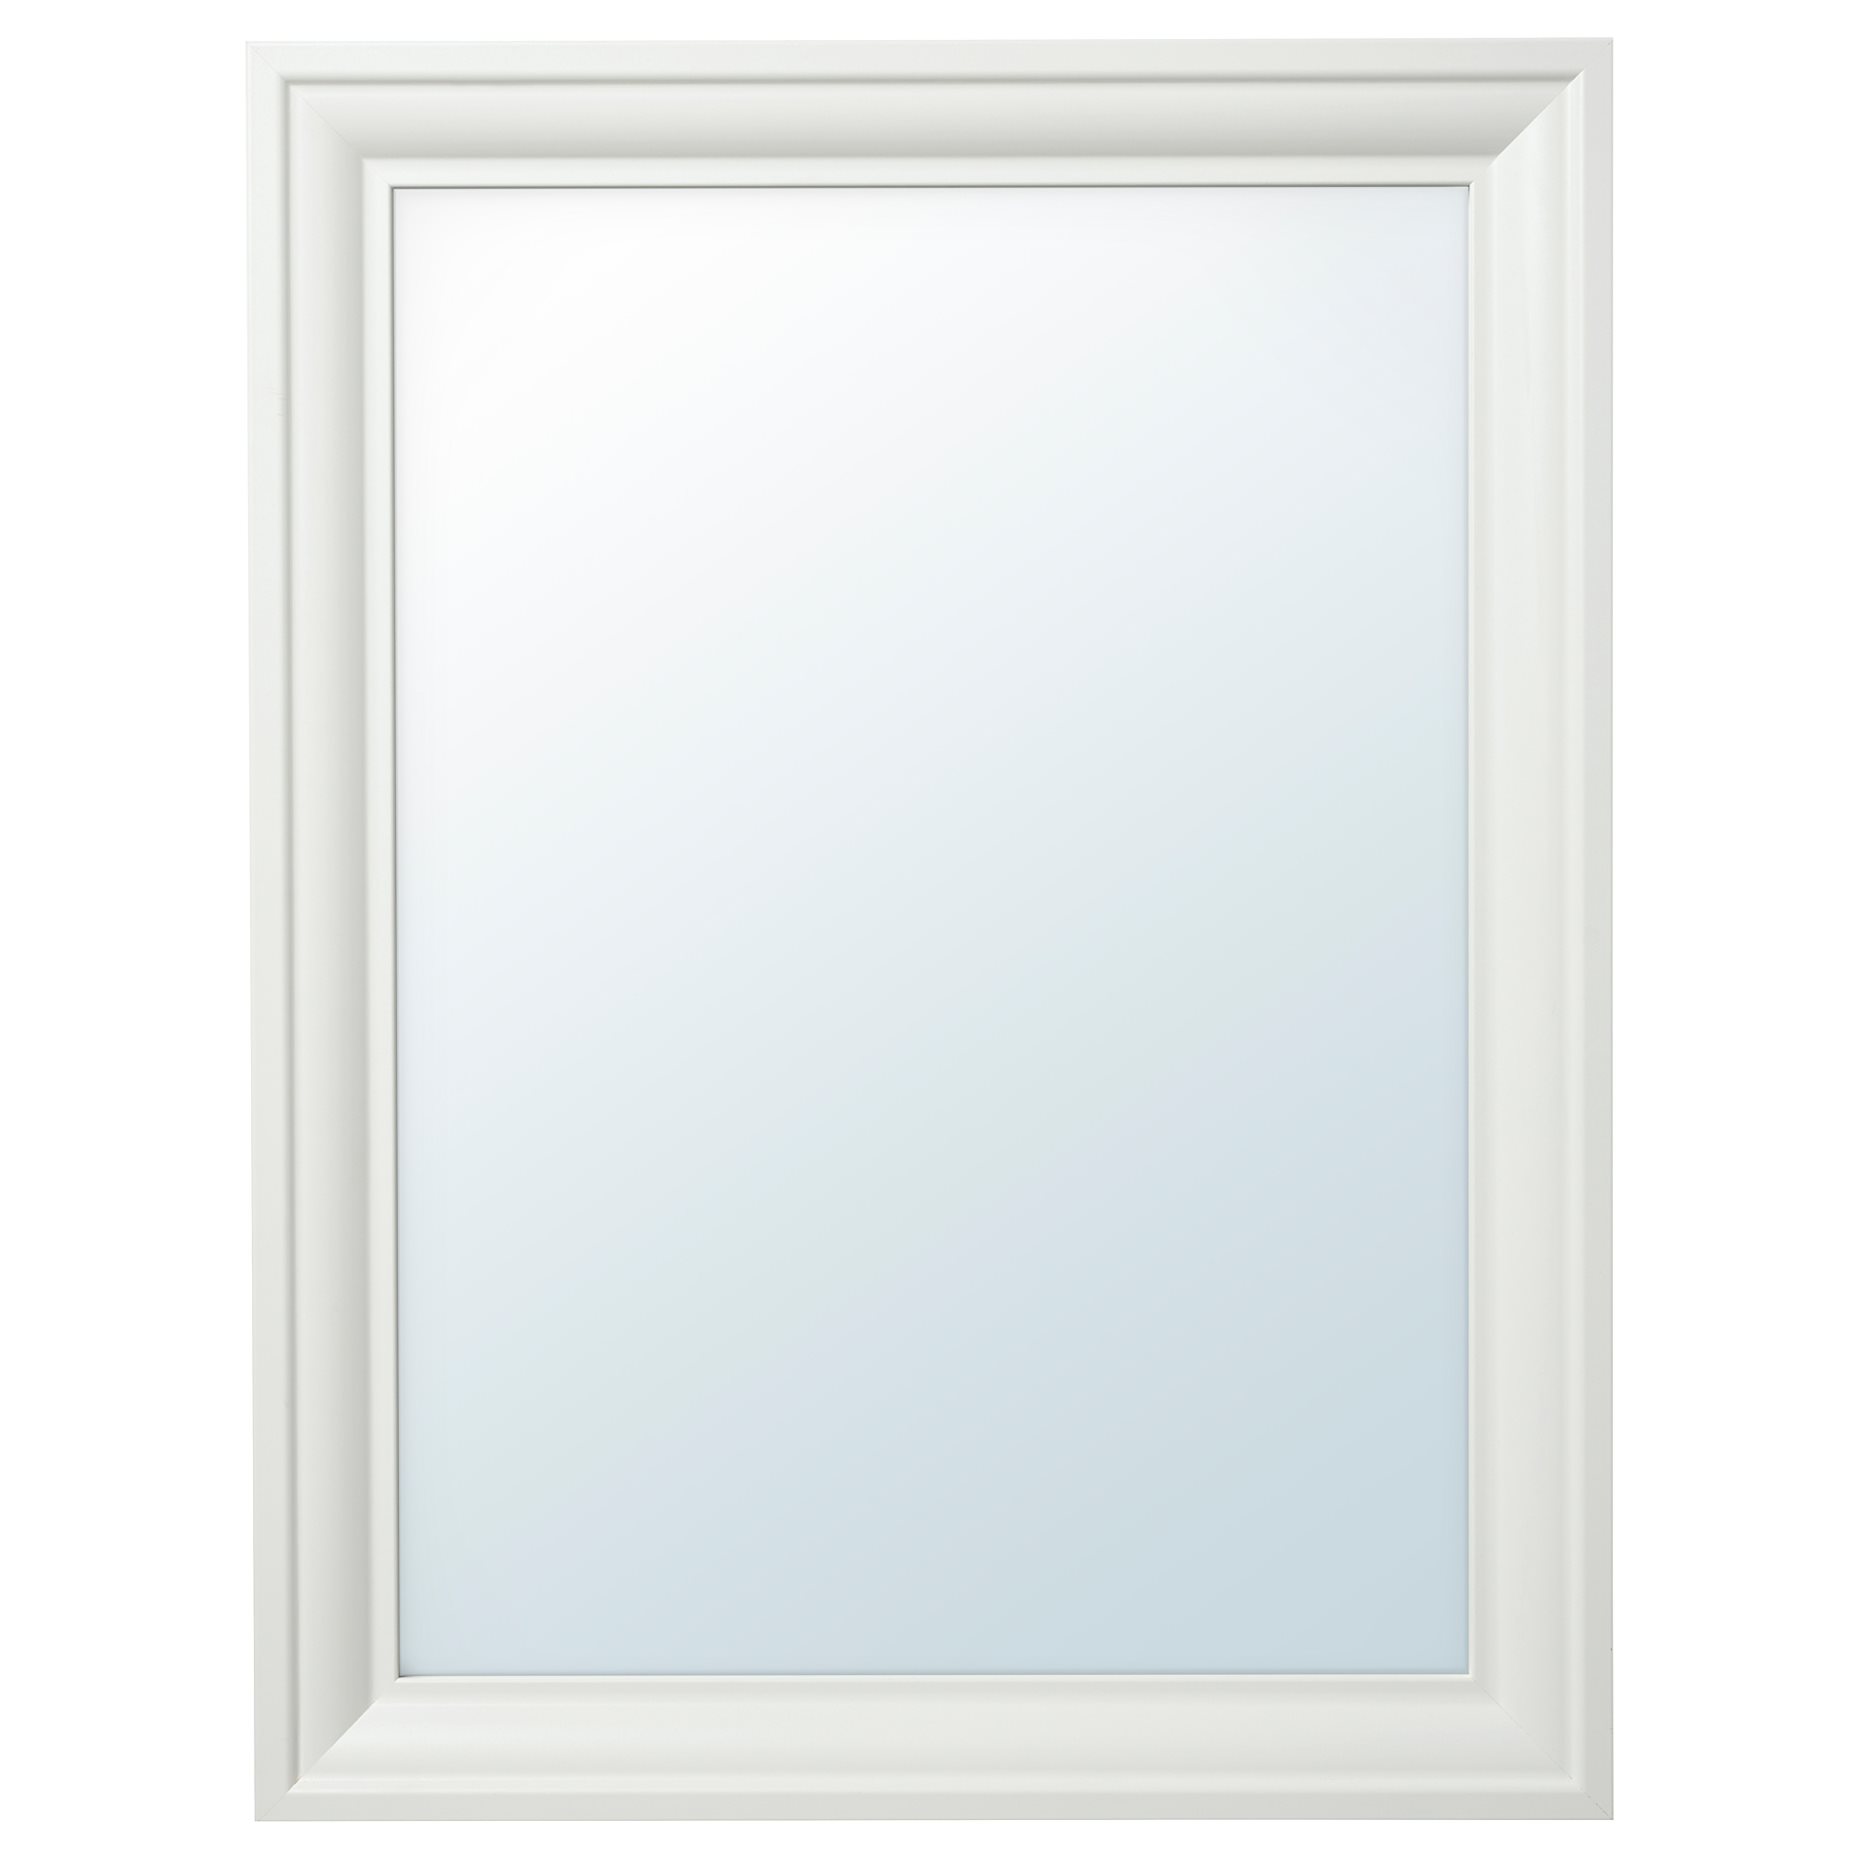 TOFTBYN, καθρέφτης, 65x85 cm, 104.591.49